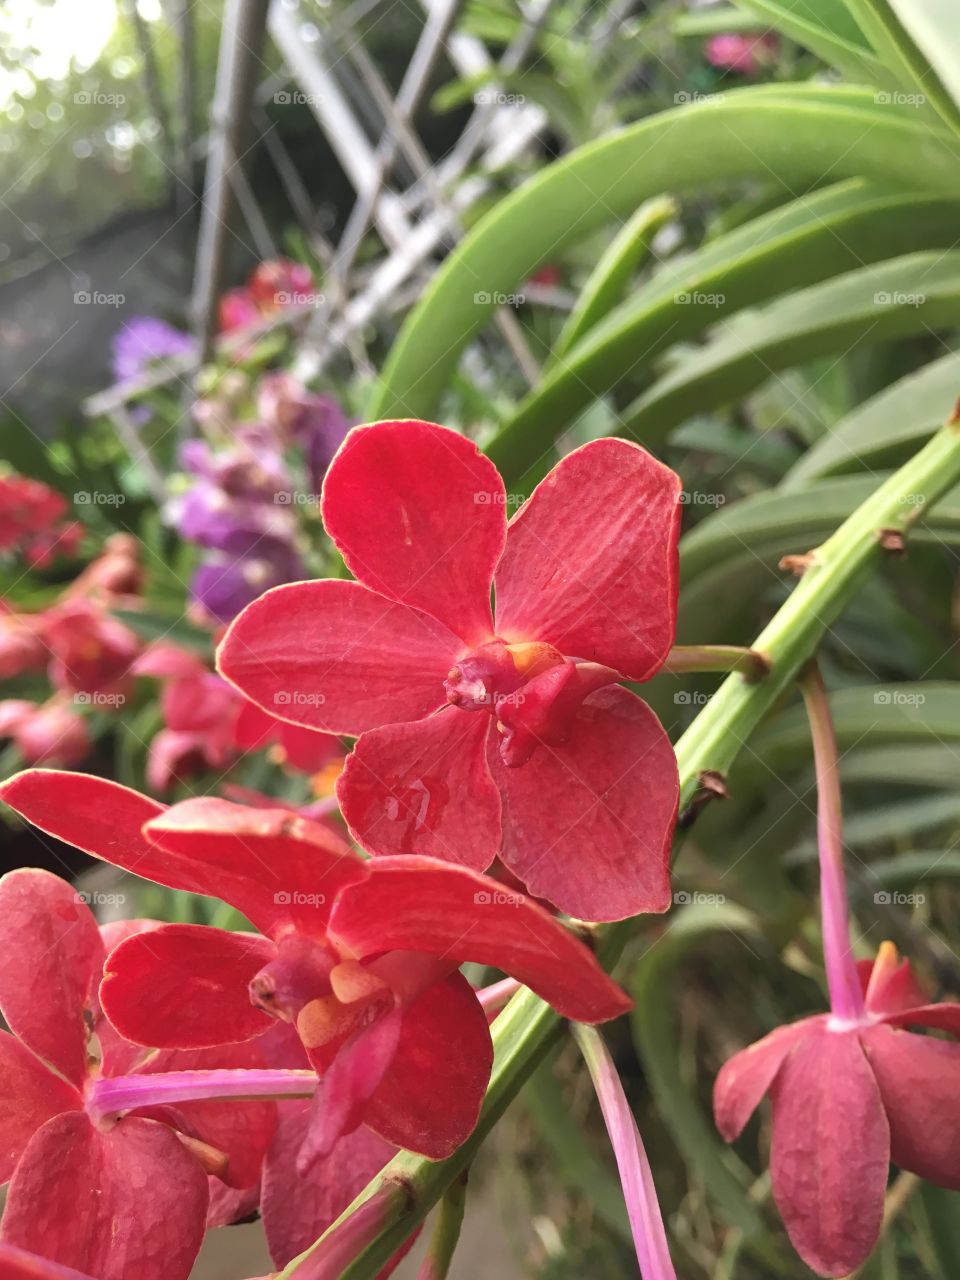 Thailand Orchids 